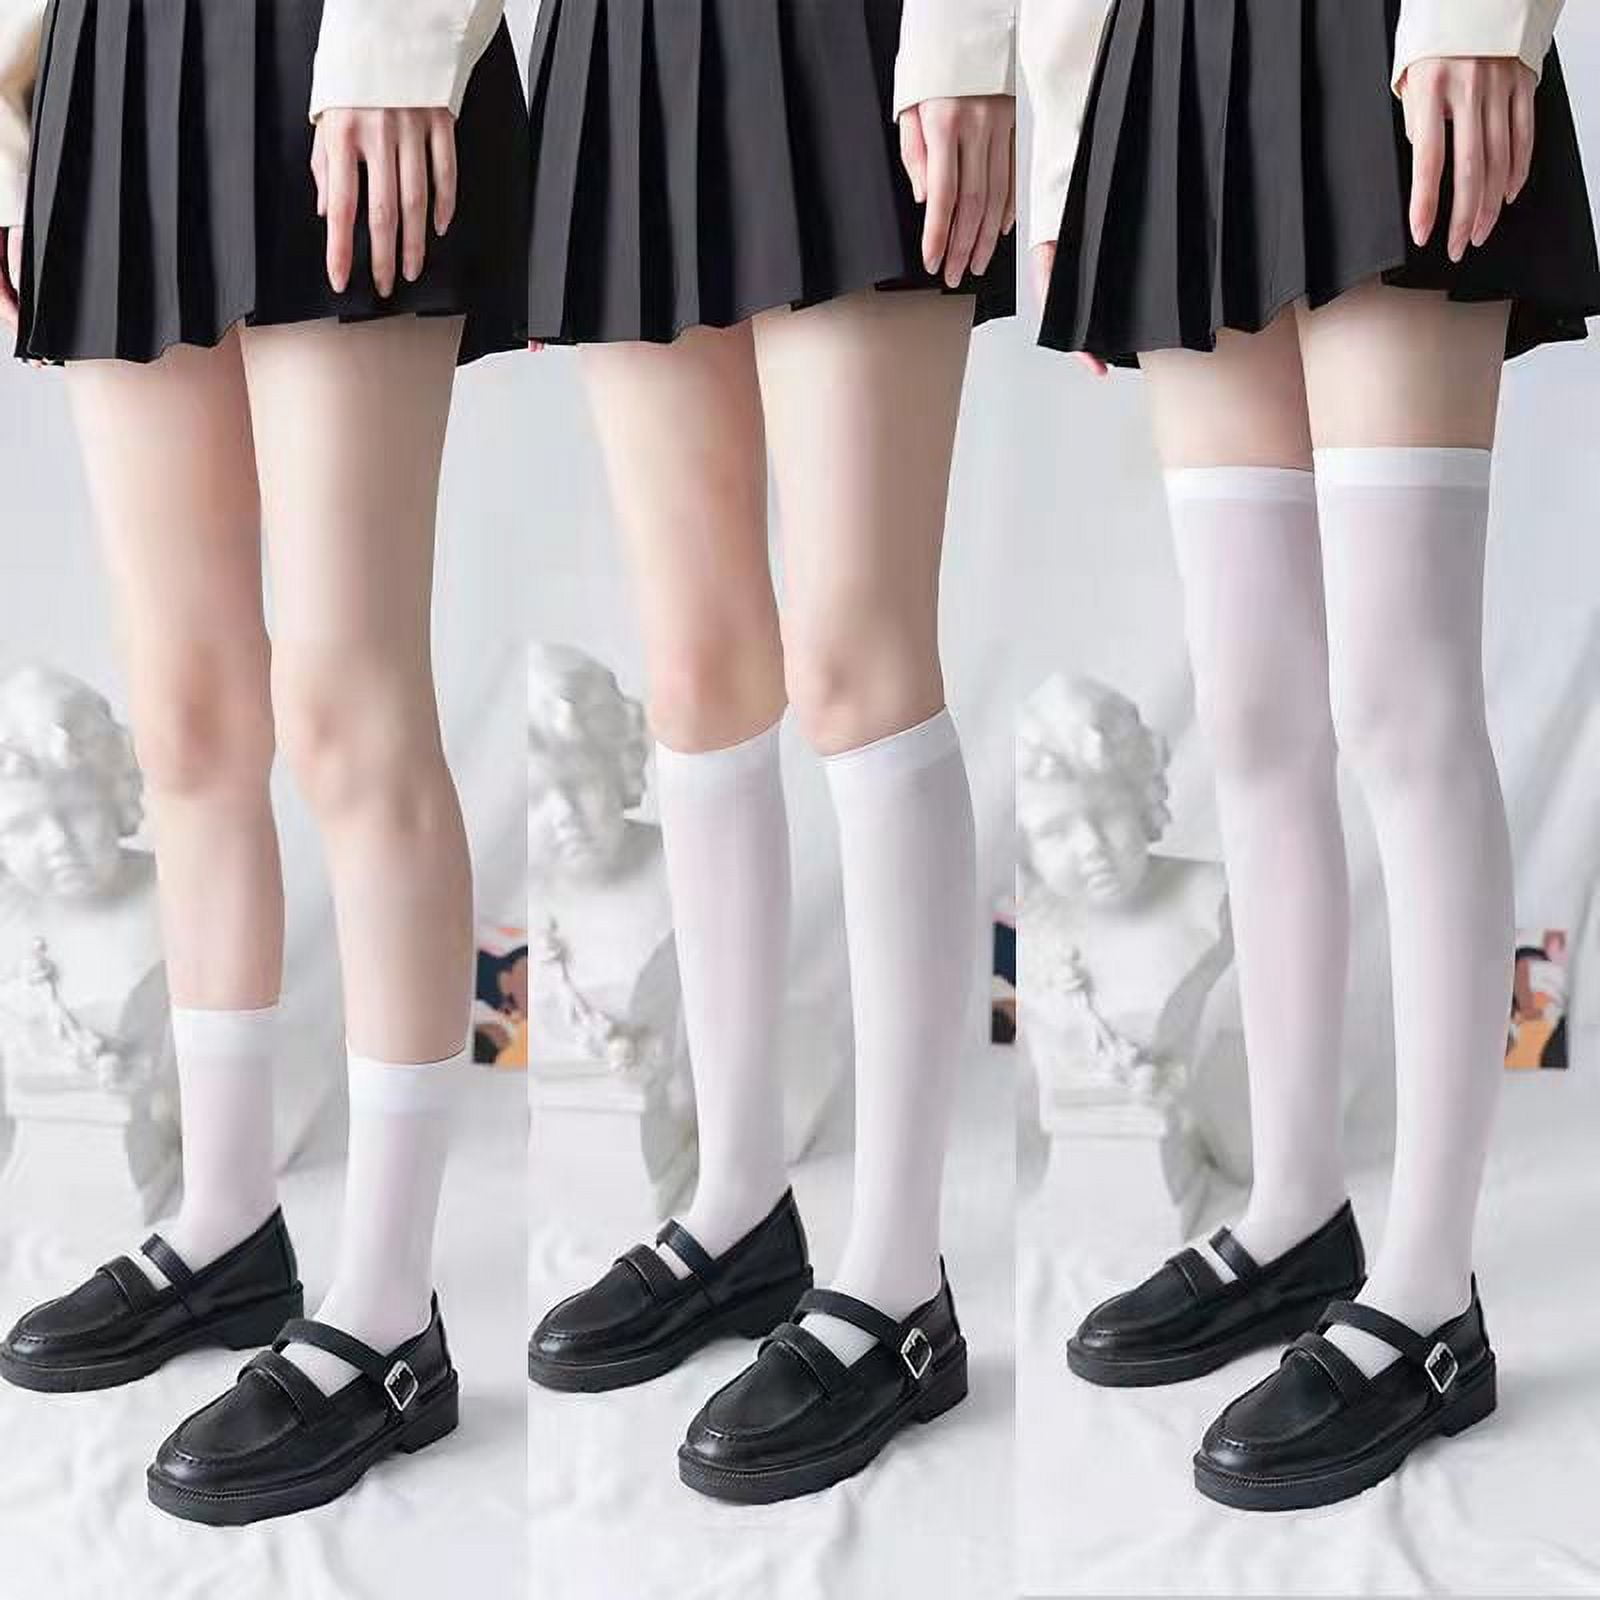 Wednesday Addams Cosplay White Costume Socks - White Knit School Uniform  Socks for 12-20 Years Girls